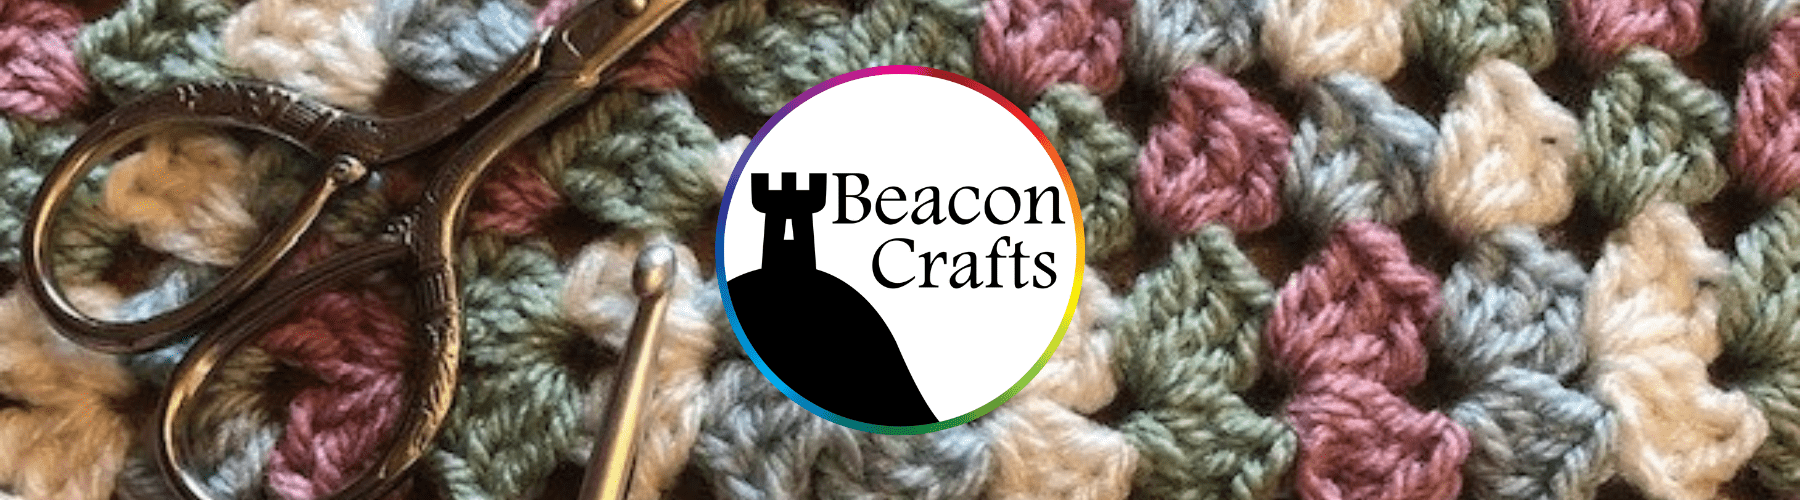 Beacon Crafts